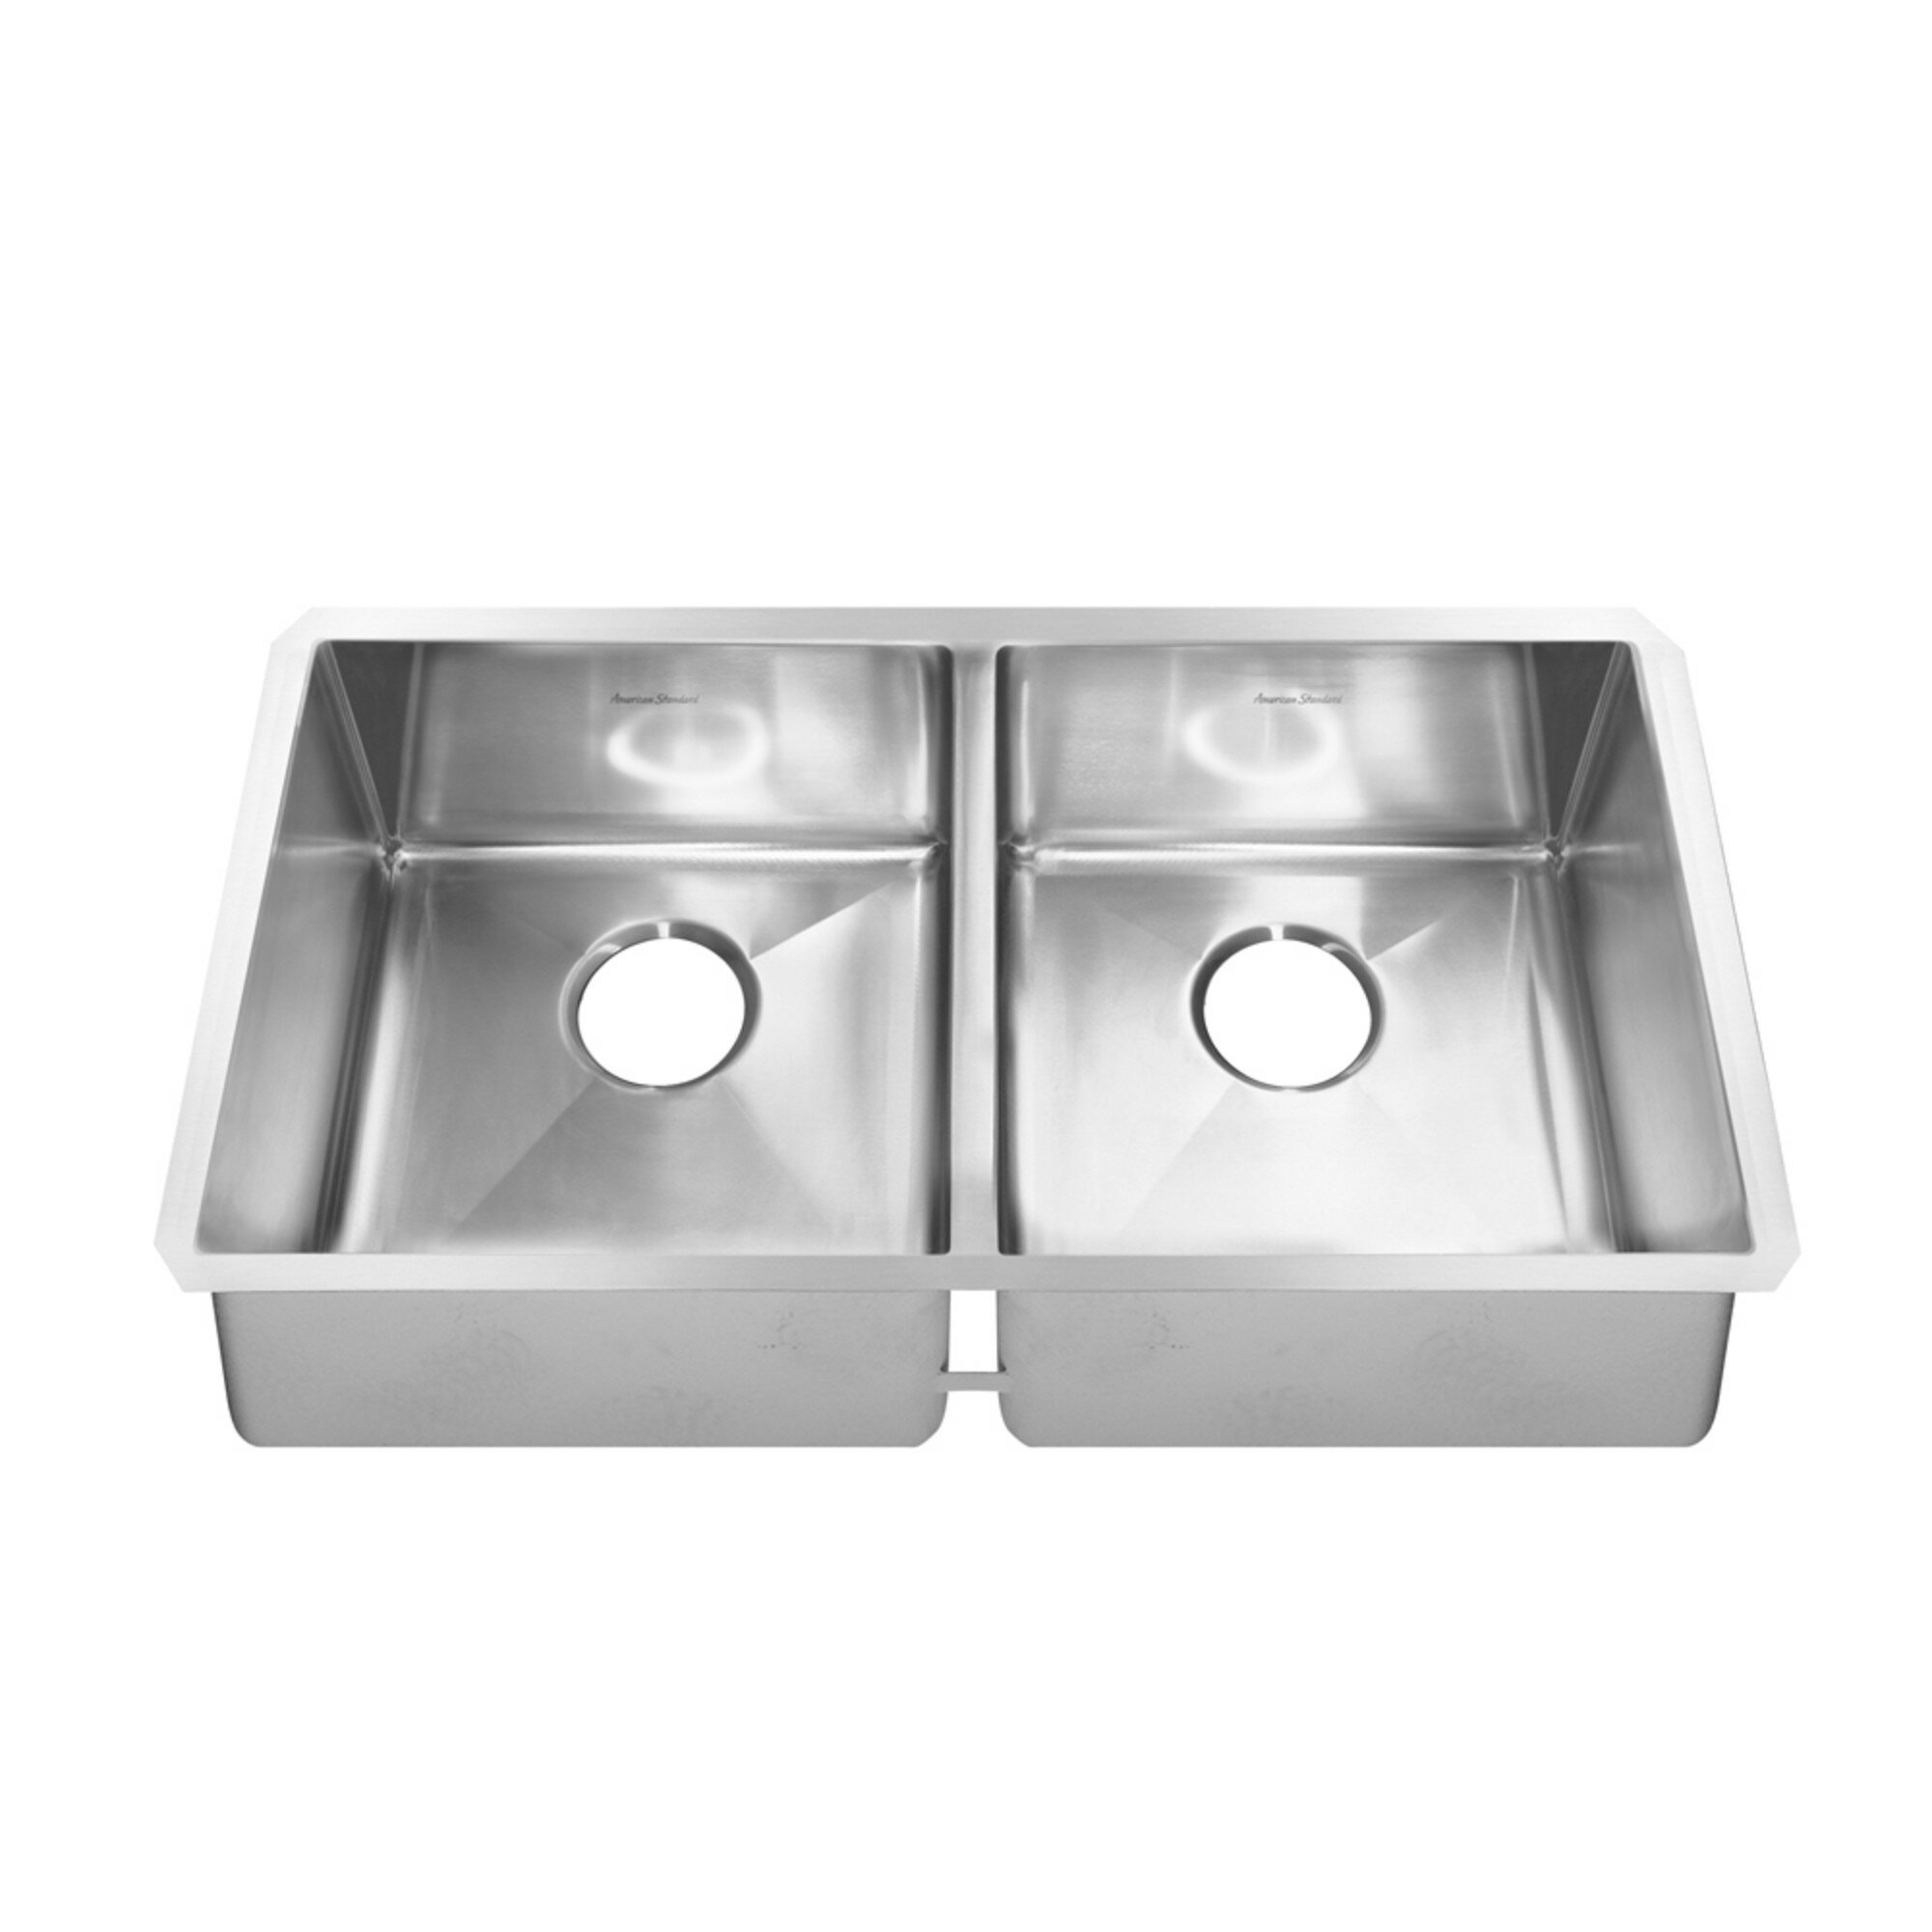 Pekoe 35 L Undermount Double Bowl Stainless Steel Kitchen Sink 